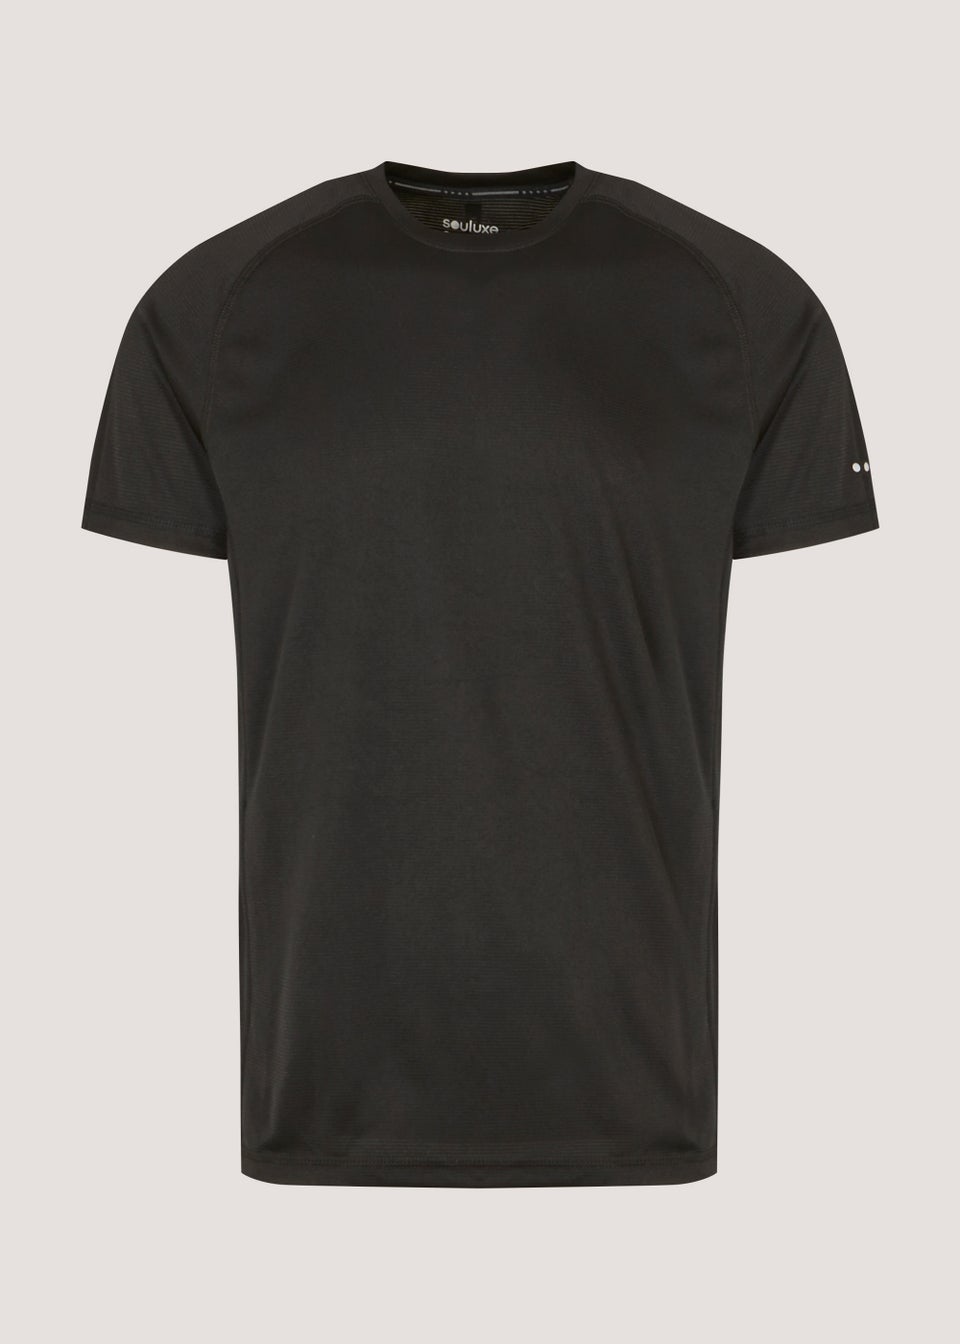 Souluxe Black Essential Sports T-Shirt - Matalan